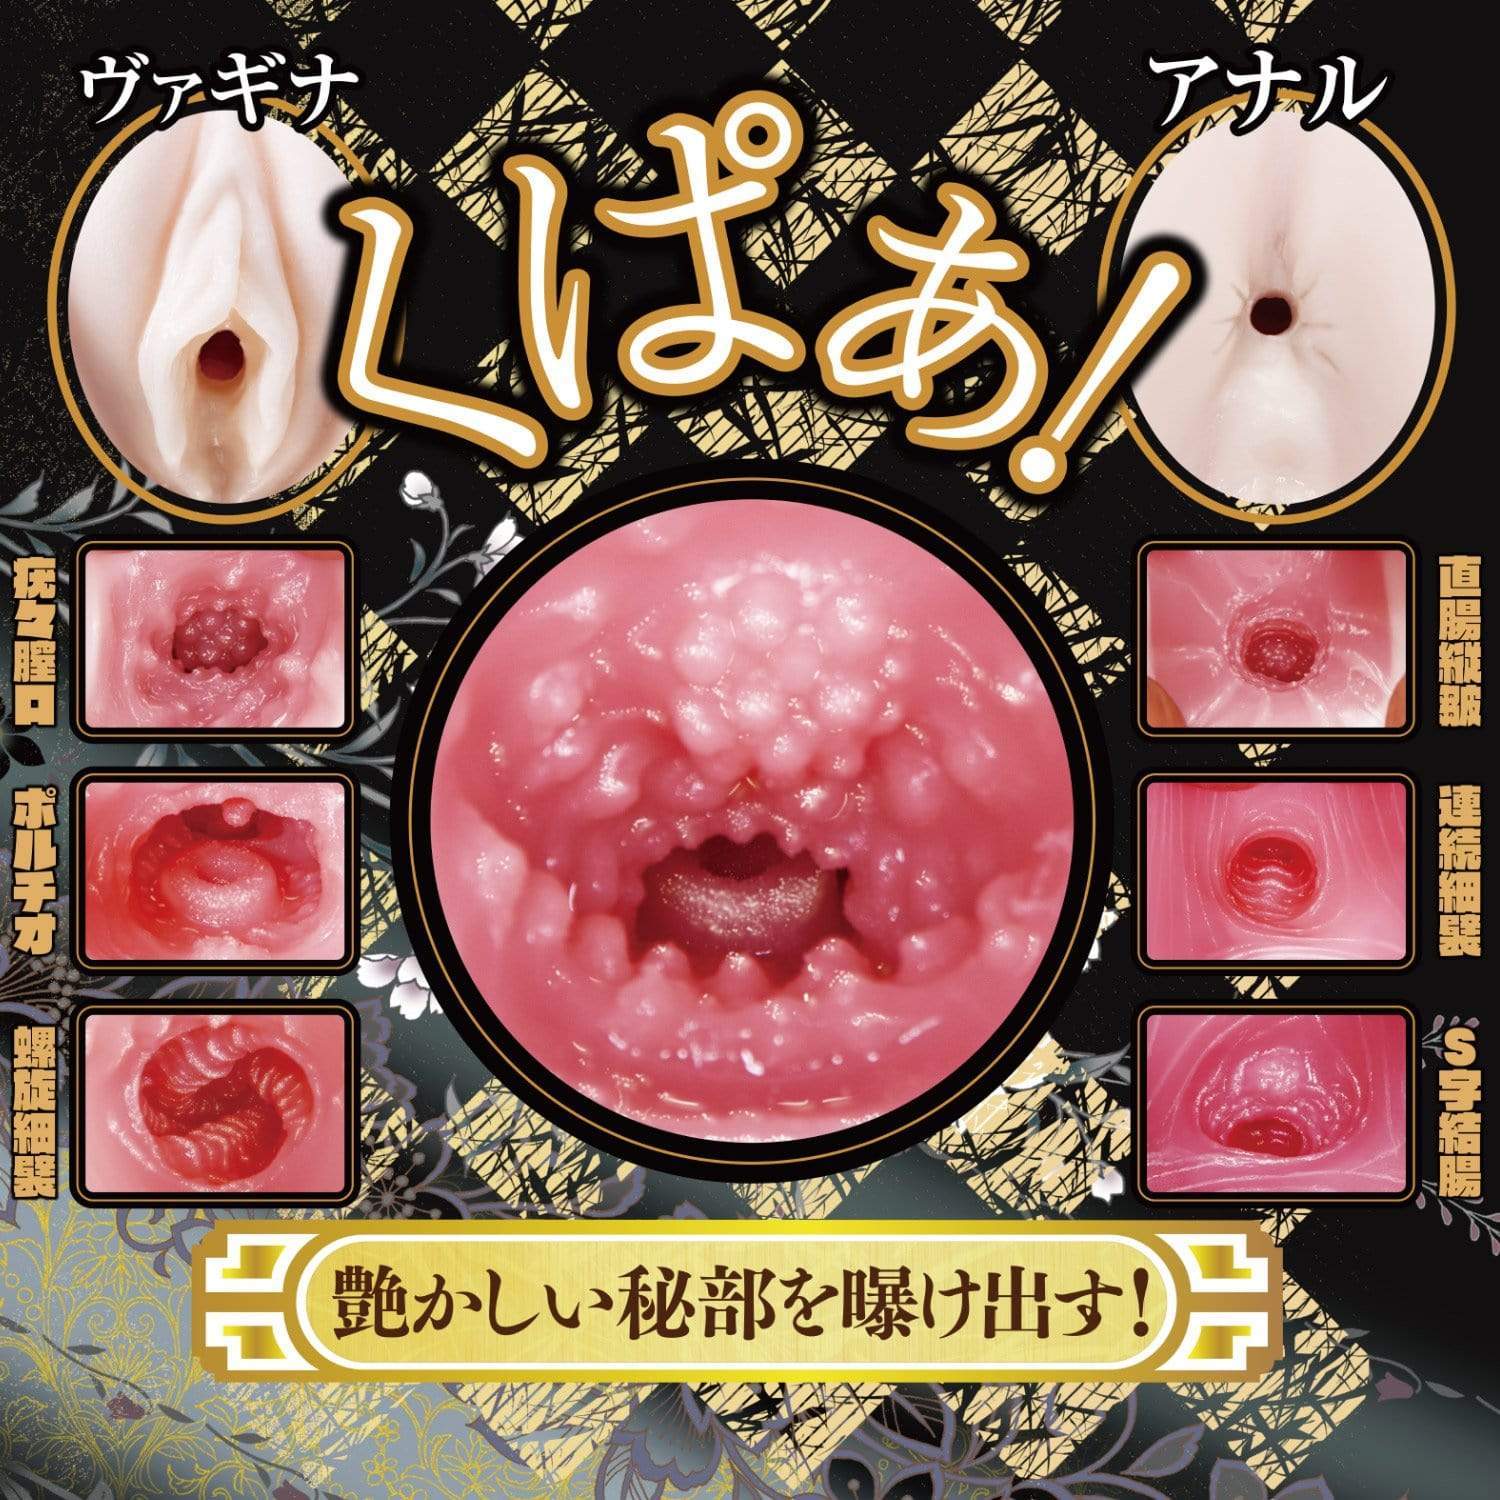 NPG - 2 Hole Third Generation Meiki Mizuno Waist Onahole Masturbator 6kg (Beige) Masturbator Vagina (Non Vibration) 4562160137140 CherryAffairs